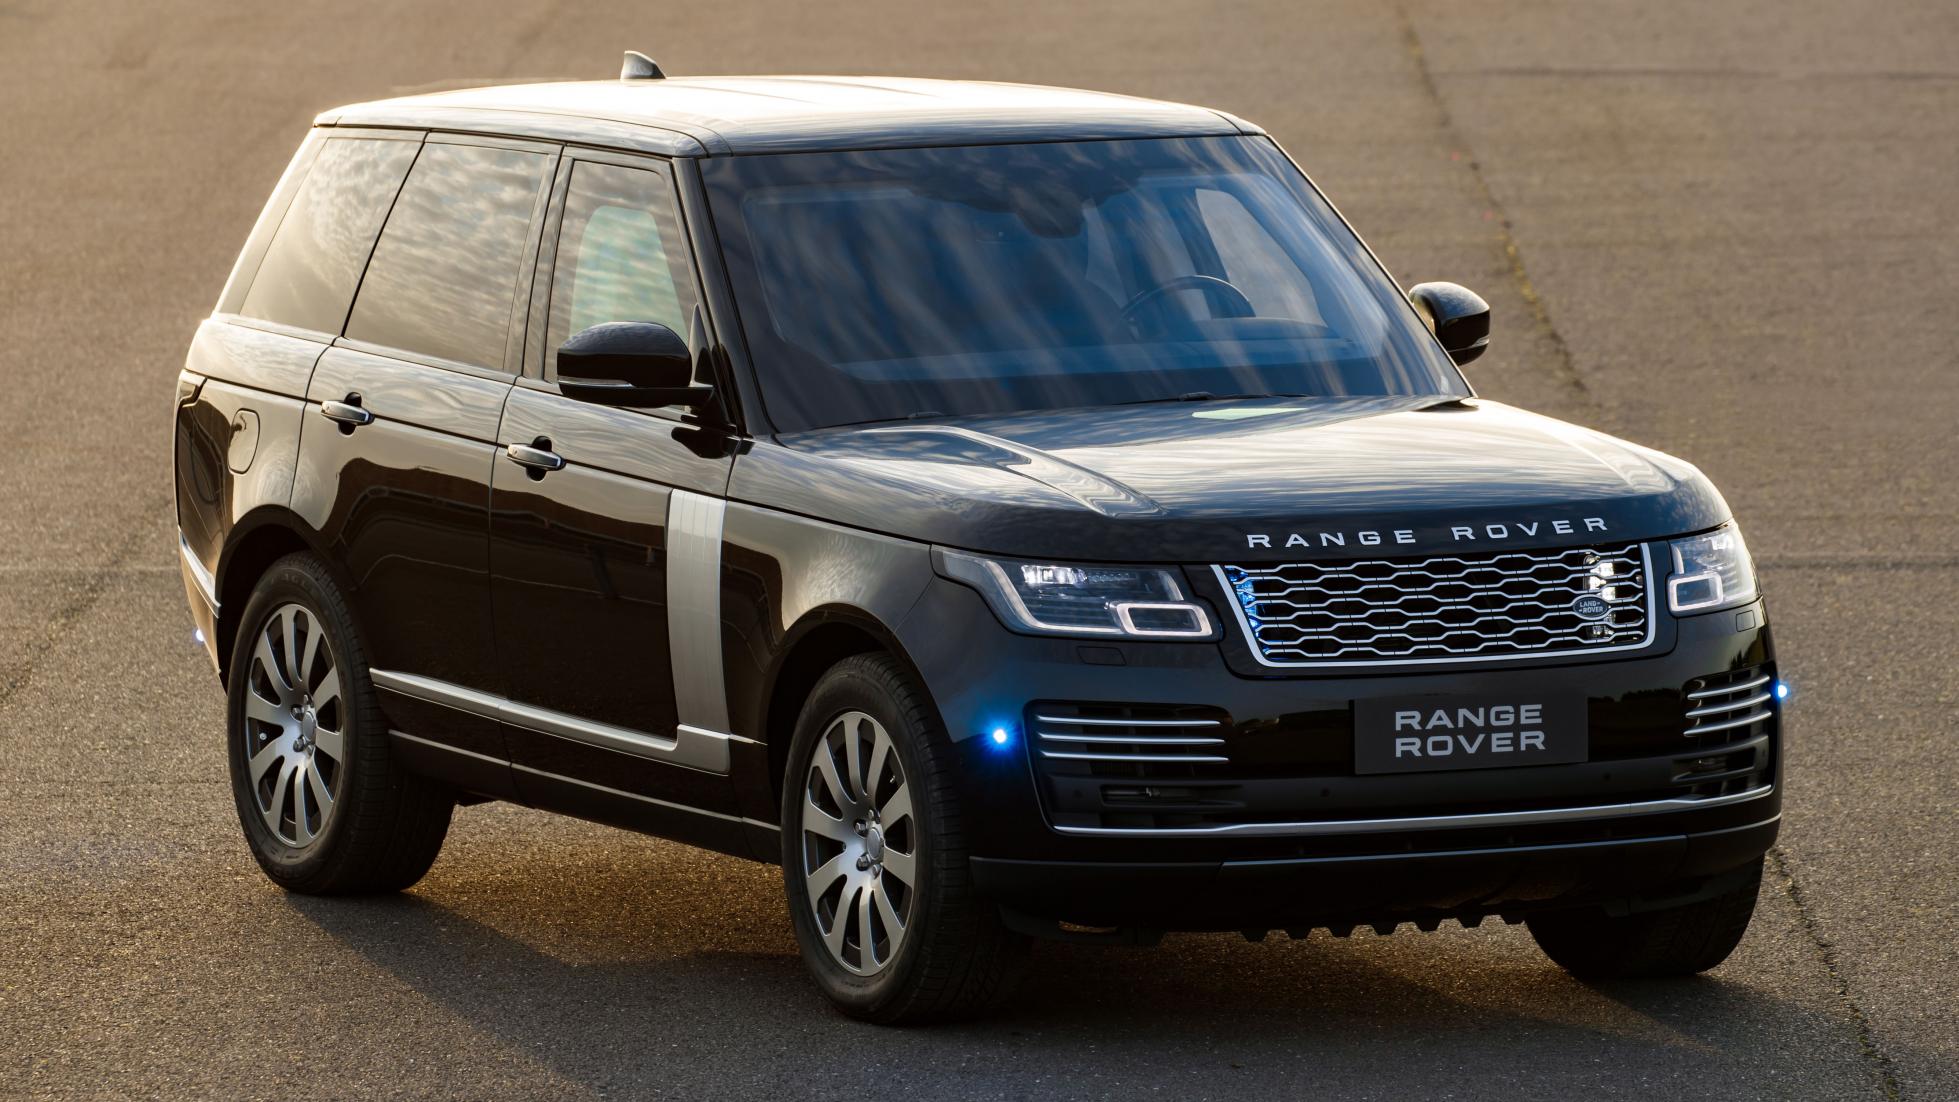 6. Range Rover Sentinel – Emergency escape system